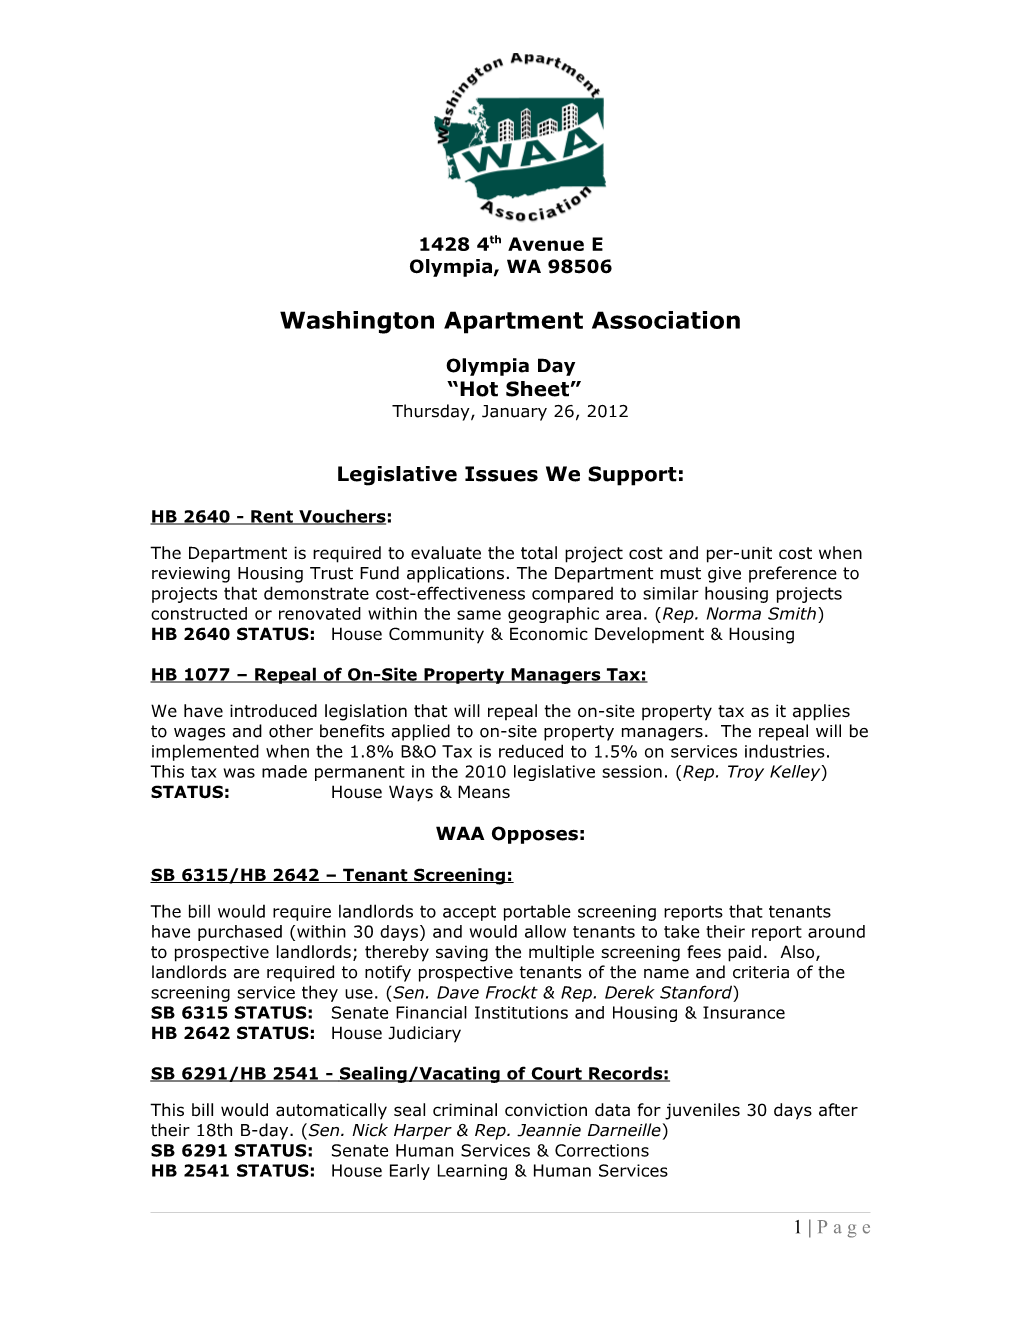 Washington Apartment Association